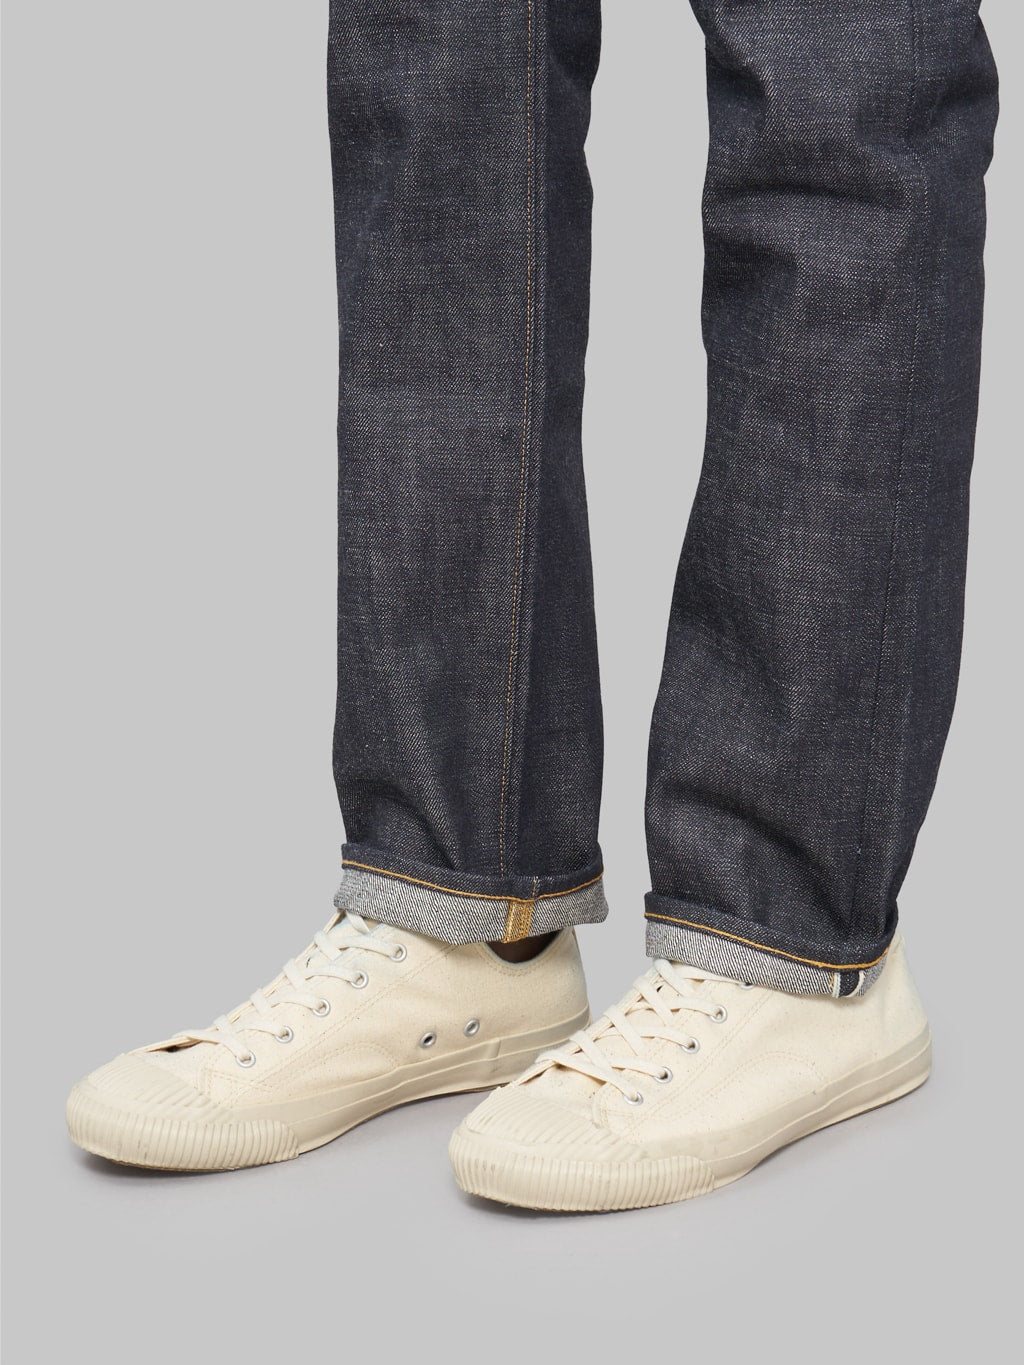 Stevenson Overall Big Sur 210 slim tapered jeans selvedge id